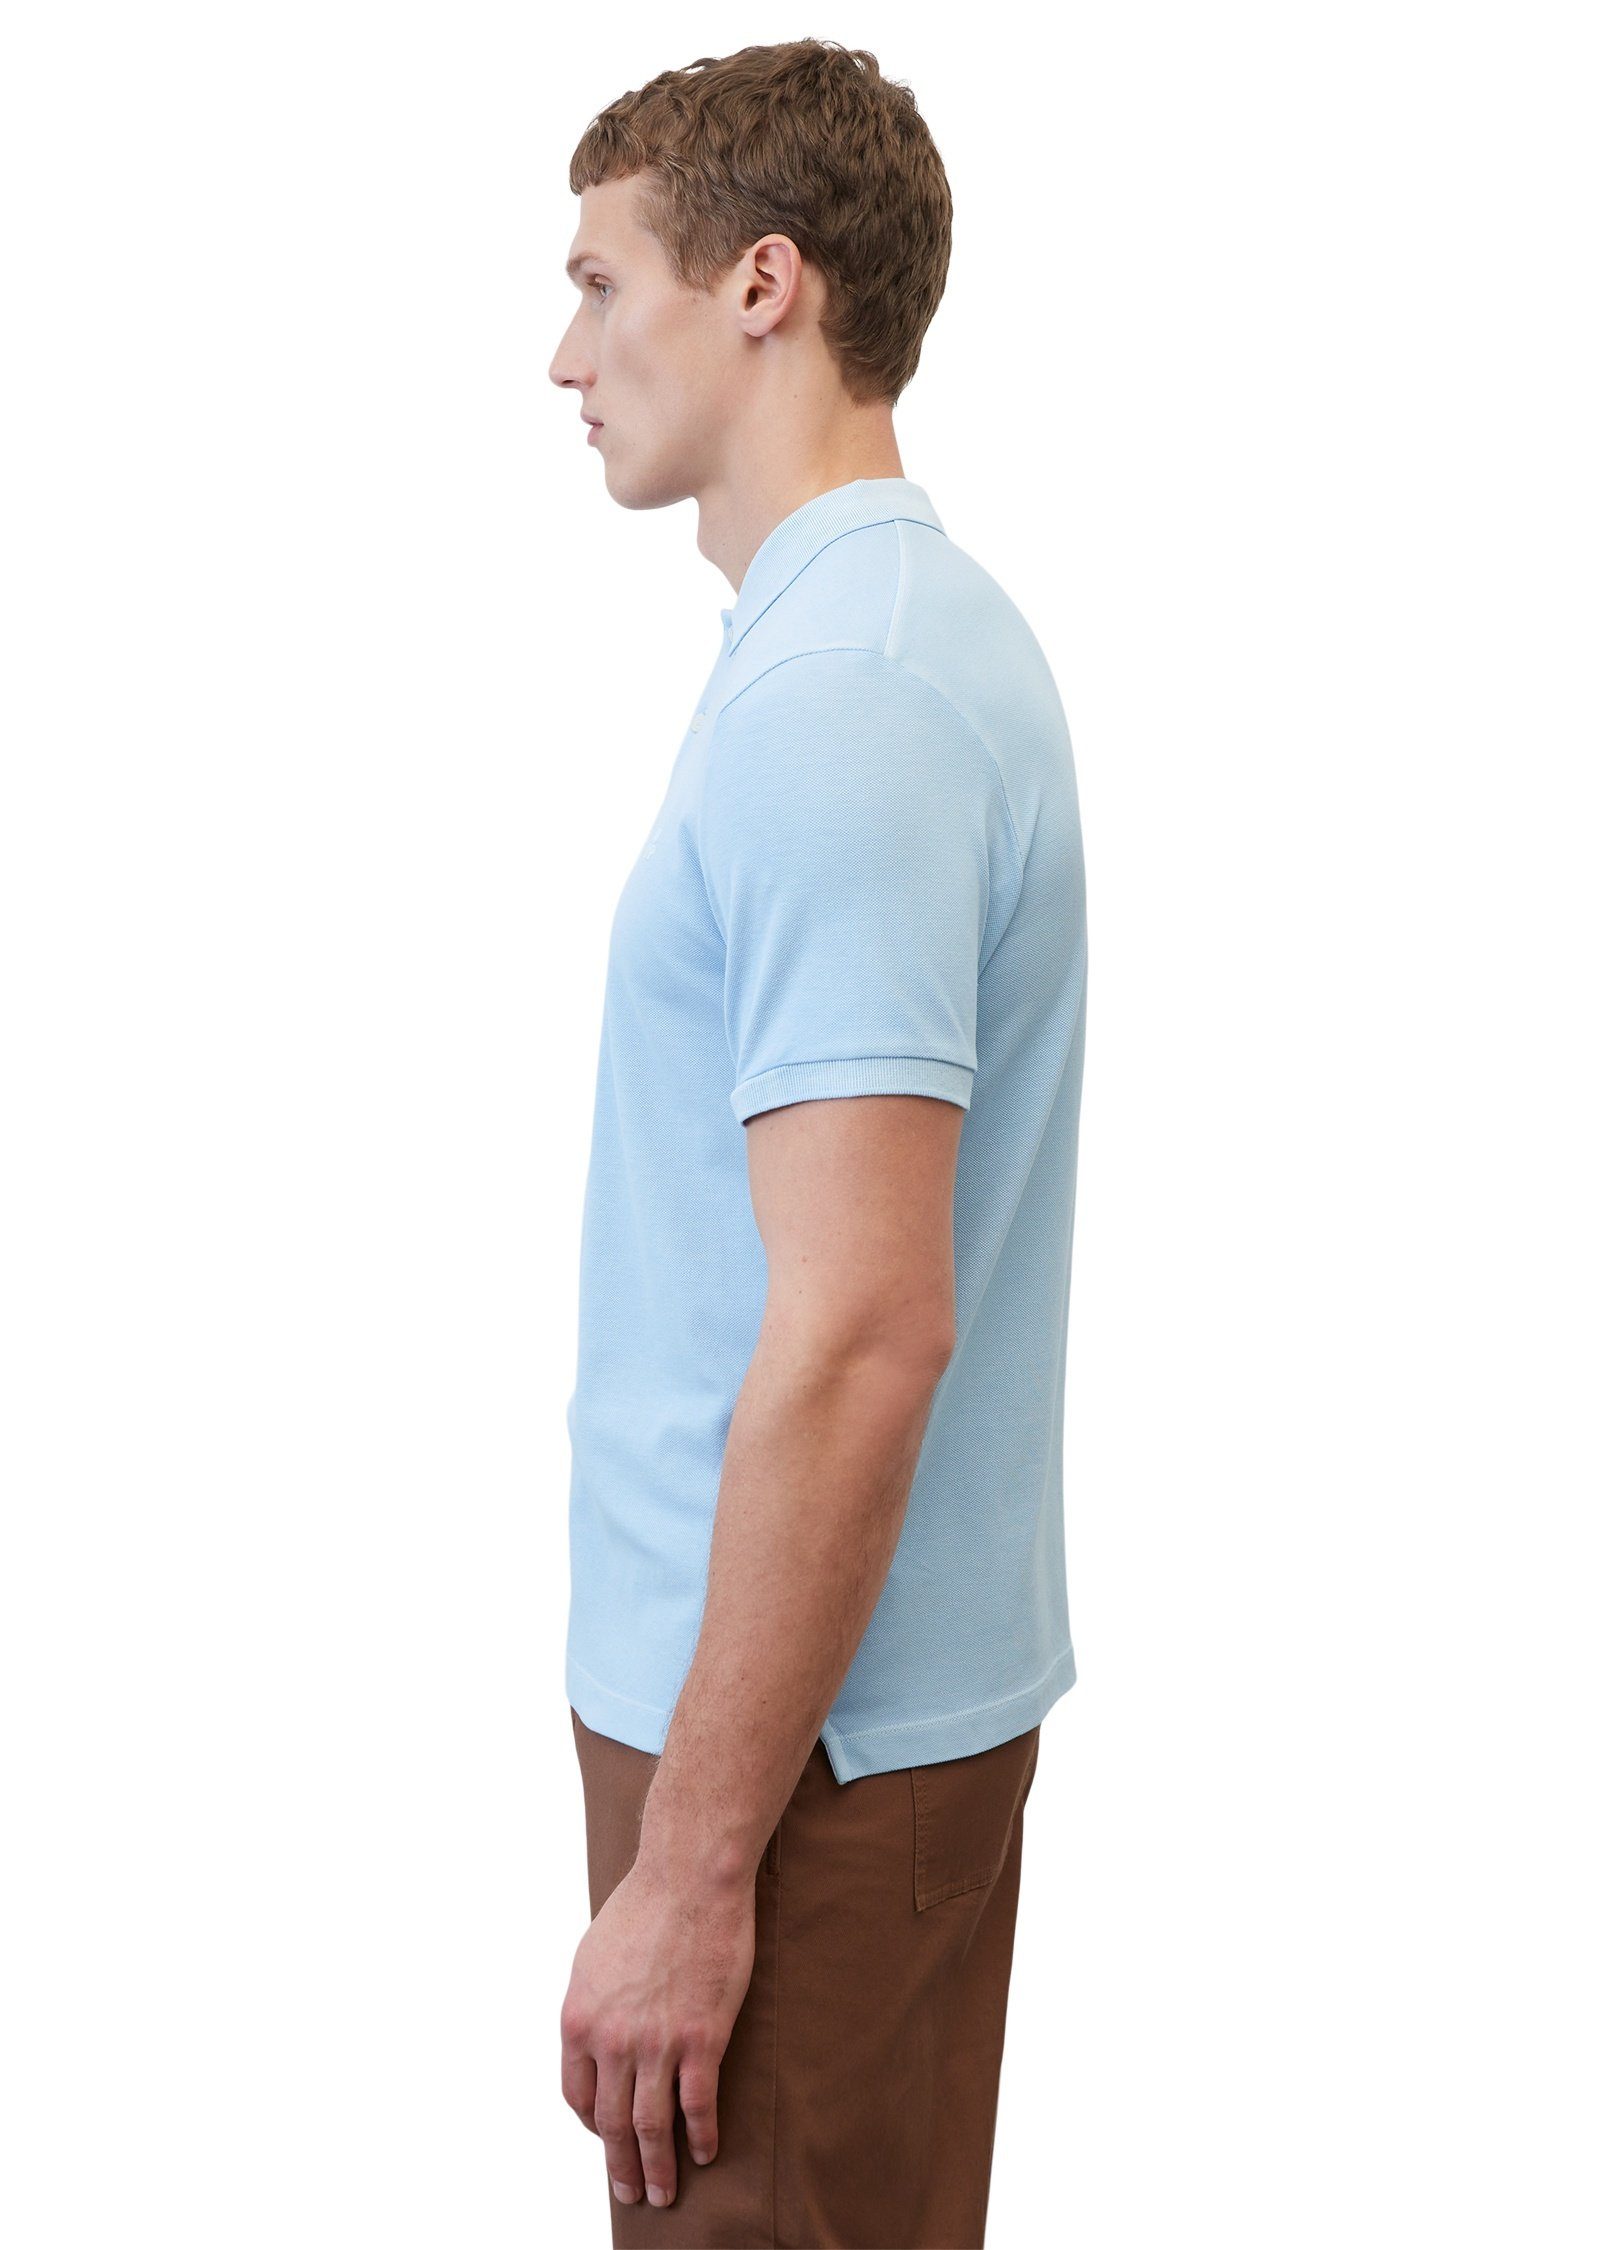 Marc aus O'Polo Cotton-Stretch Poloshirt Organic himmelblau